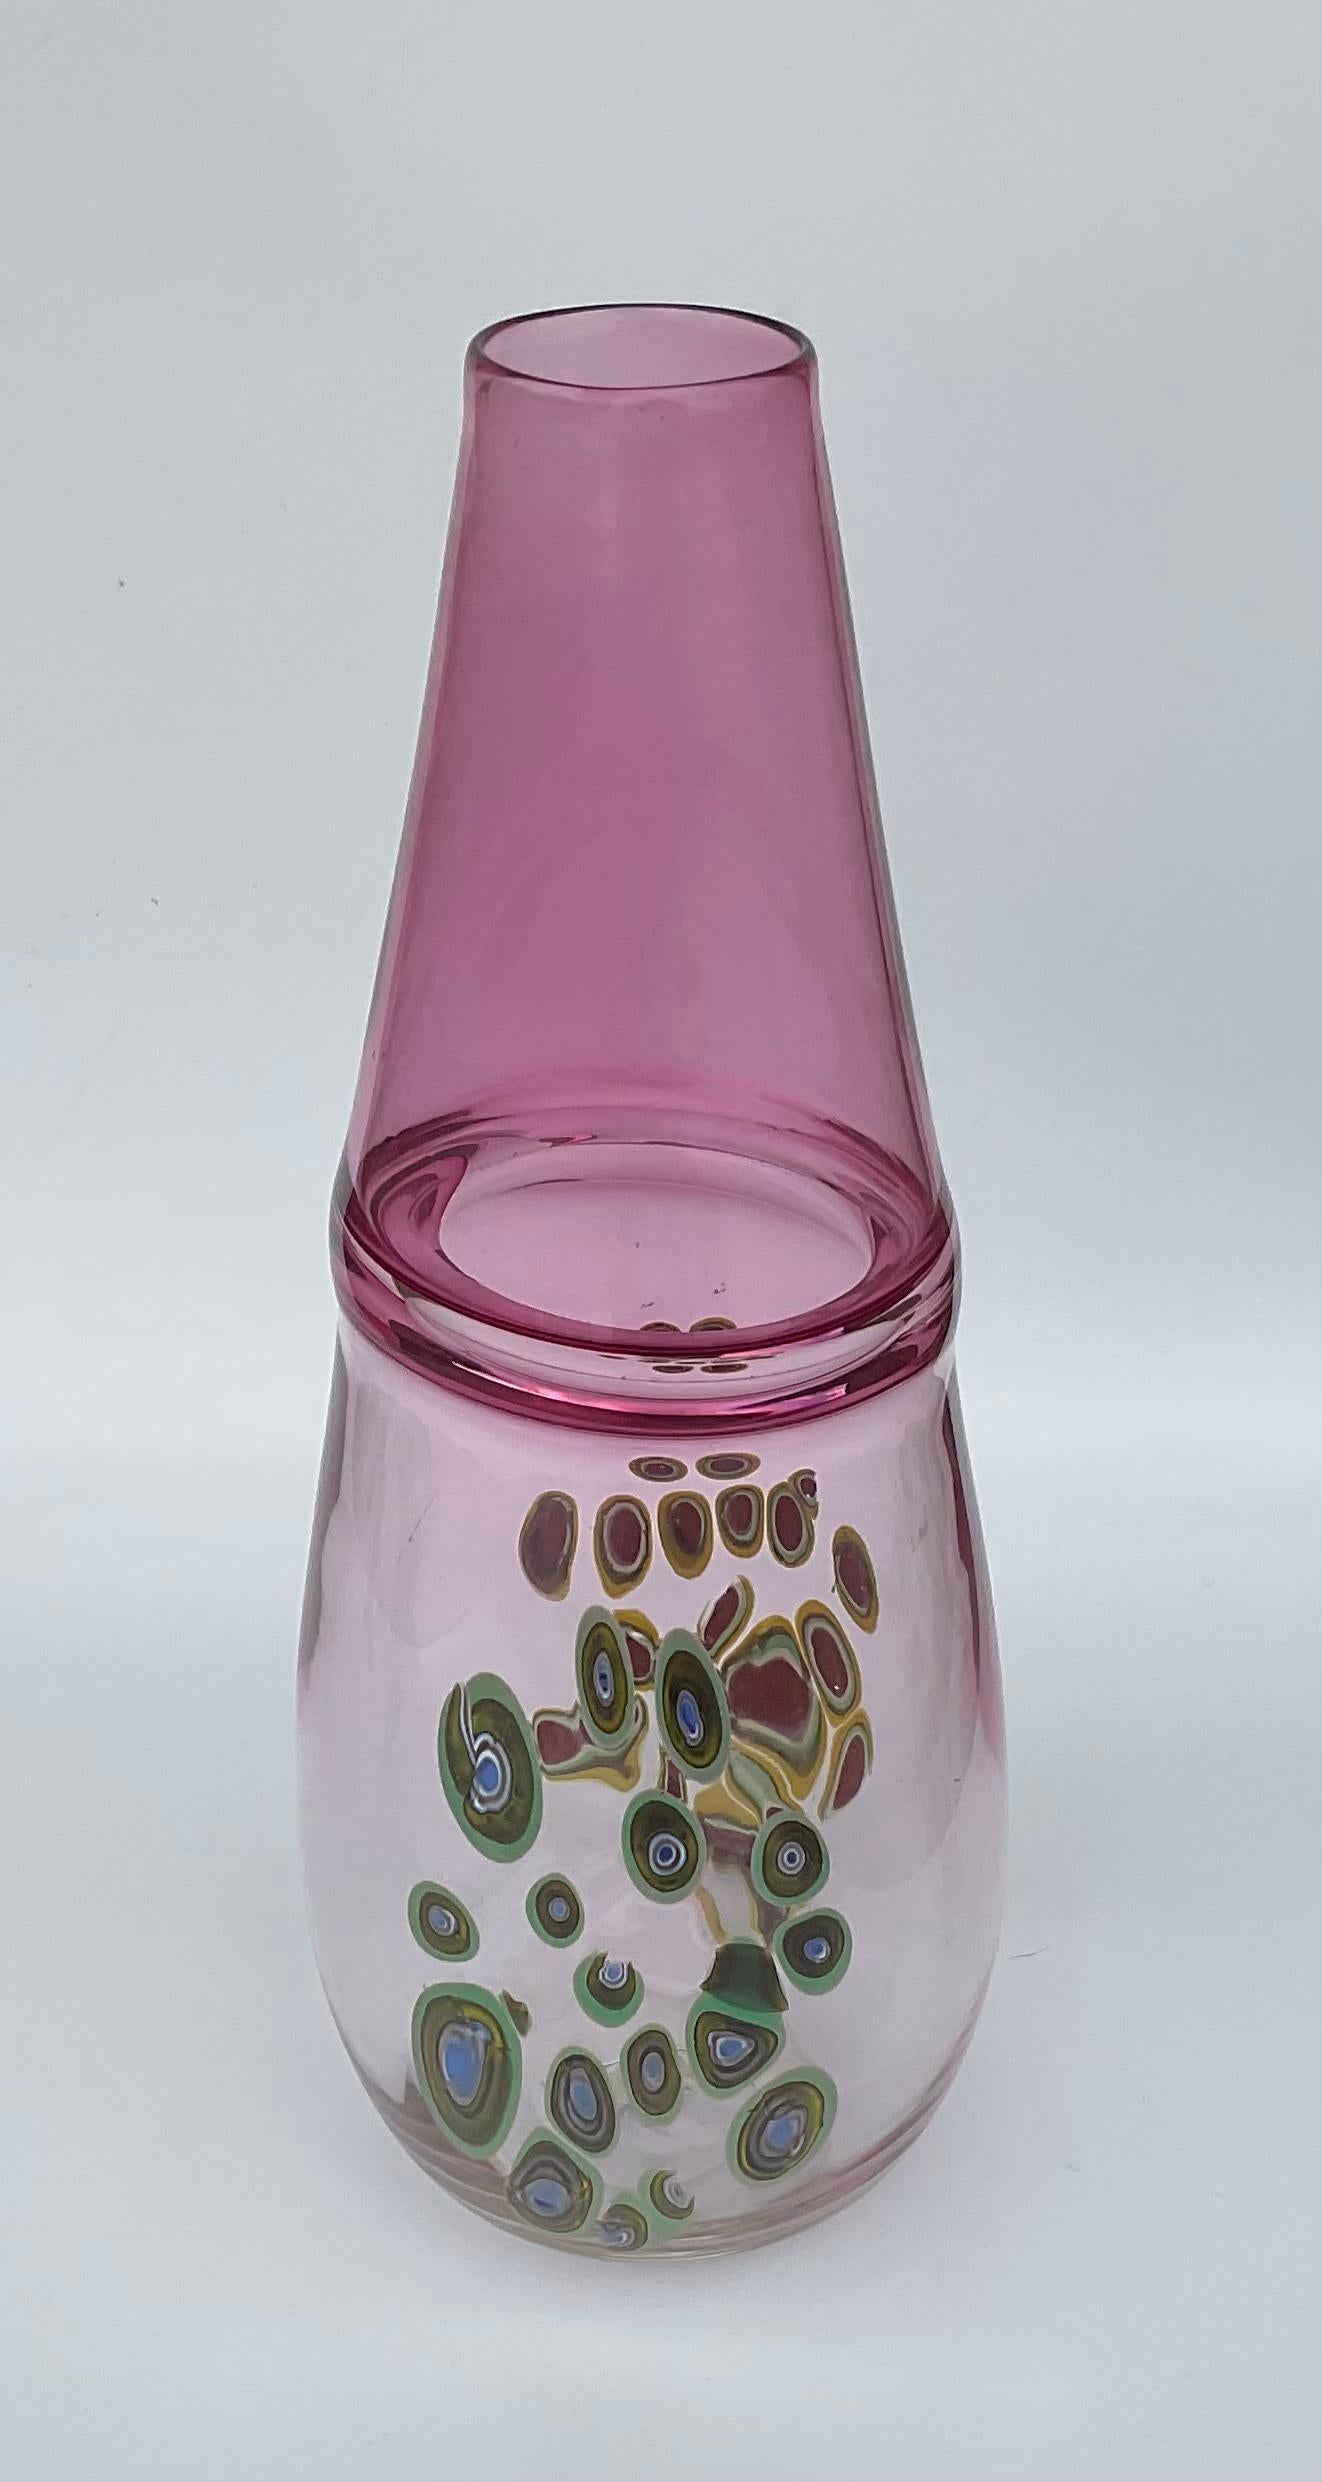 Italian Incalmo Murrine Murano Glass Vase Attributed to Vistosi with Original Label For Sale